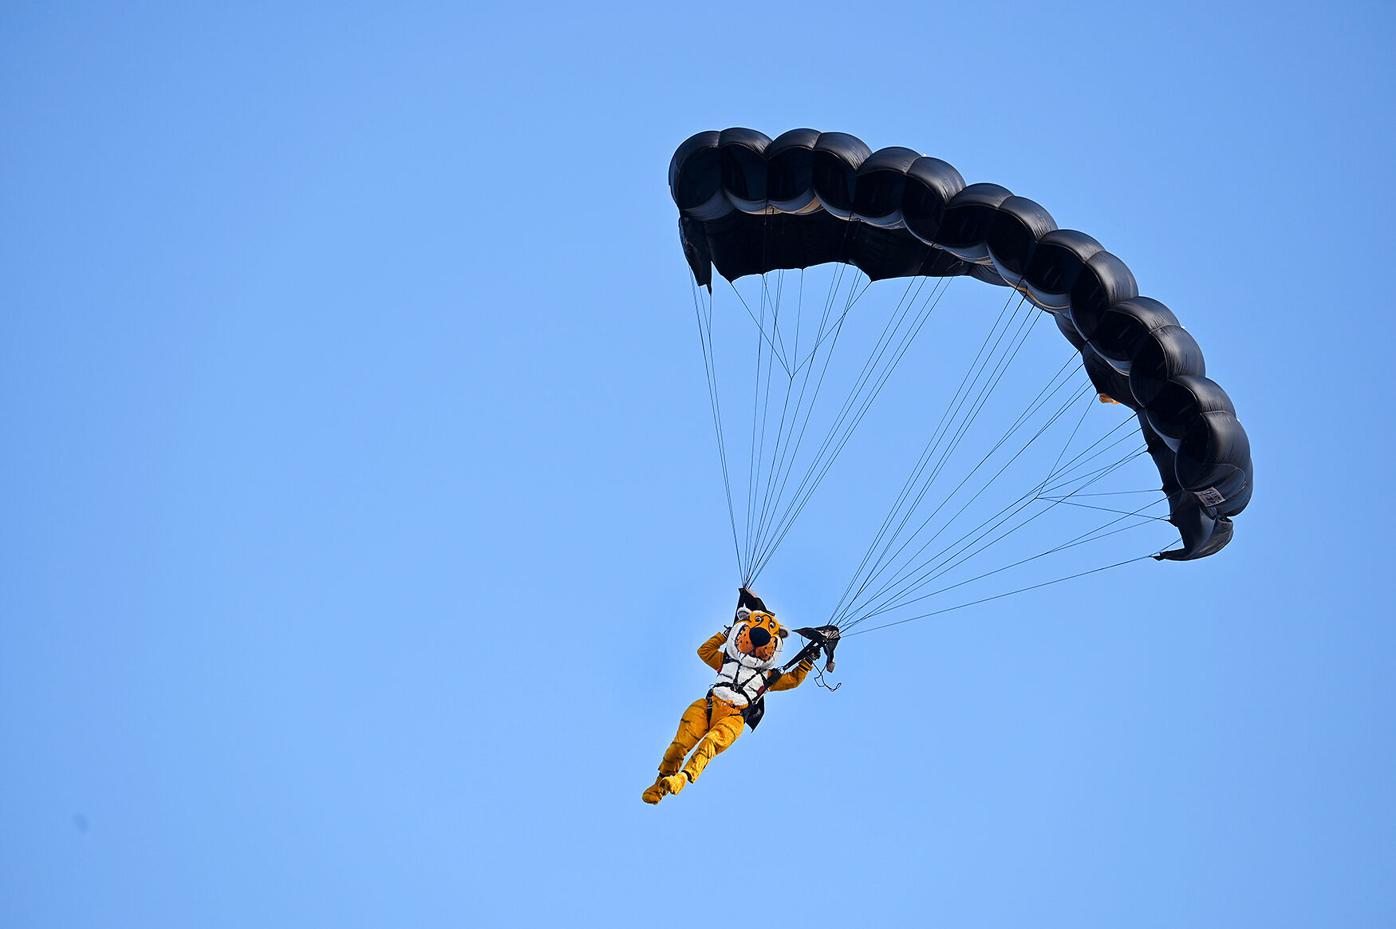 Truman parachutes onto Faurot Field